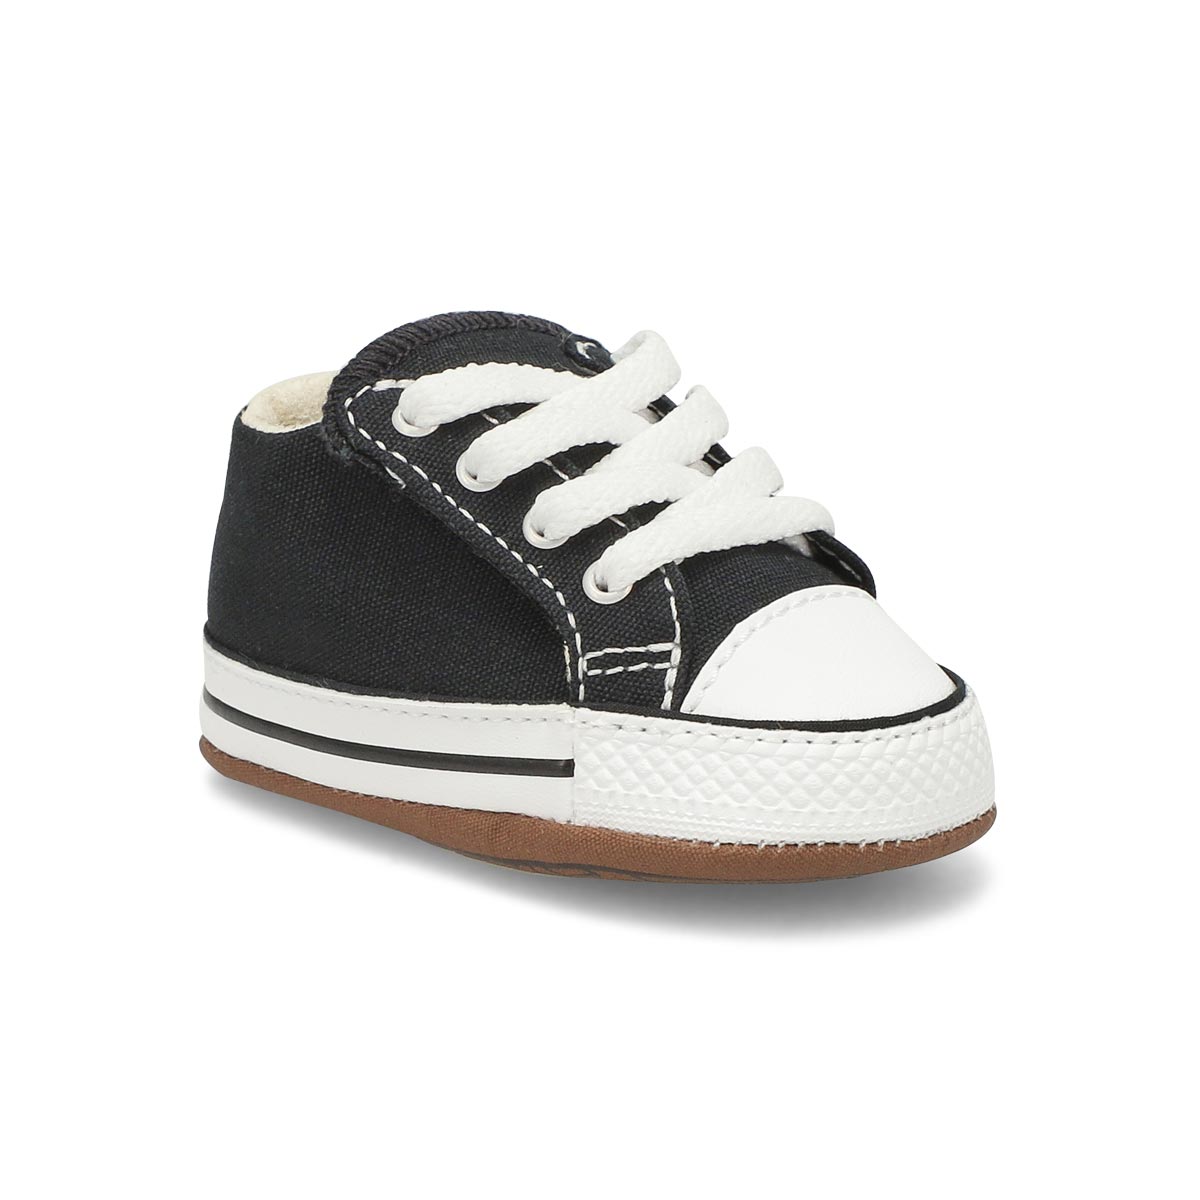 Infants' Chuck Taylor All Star Cribster Sneaker - Black